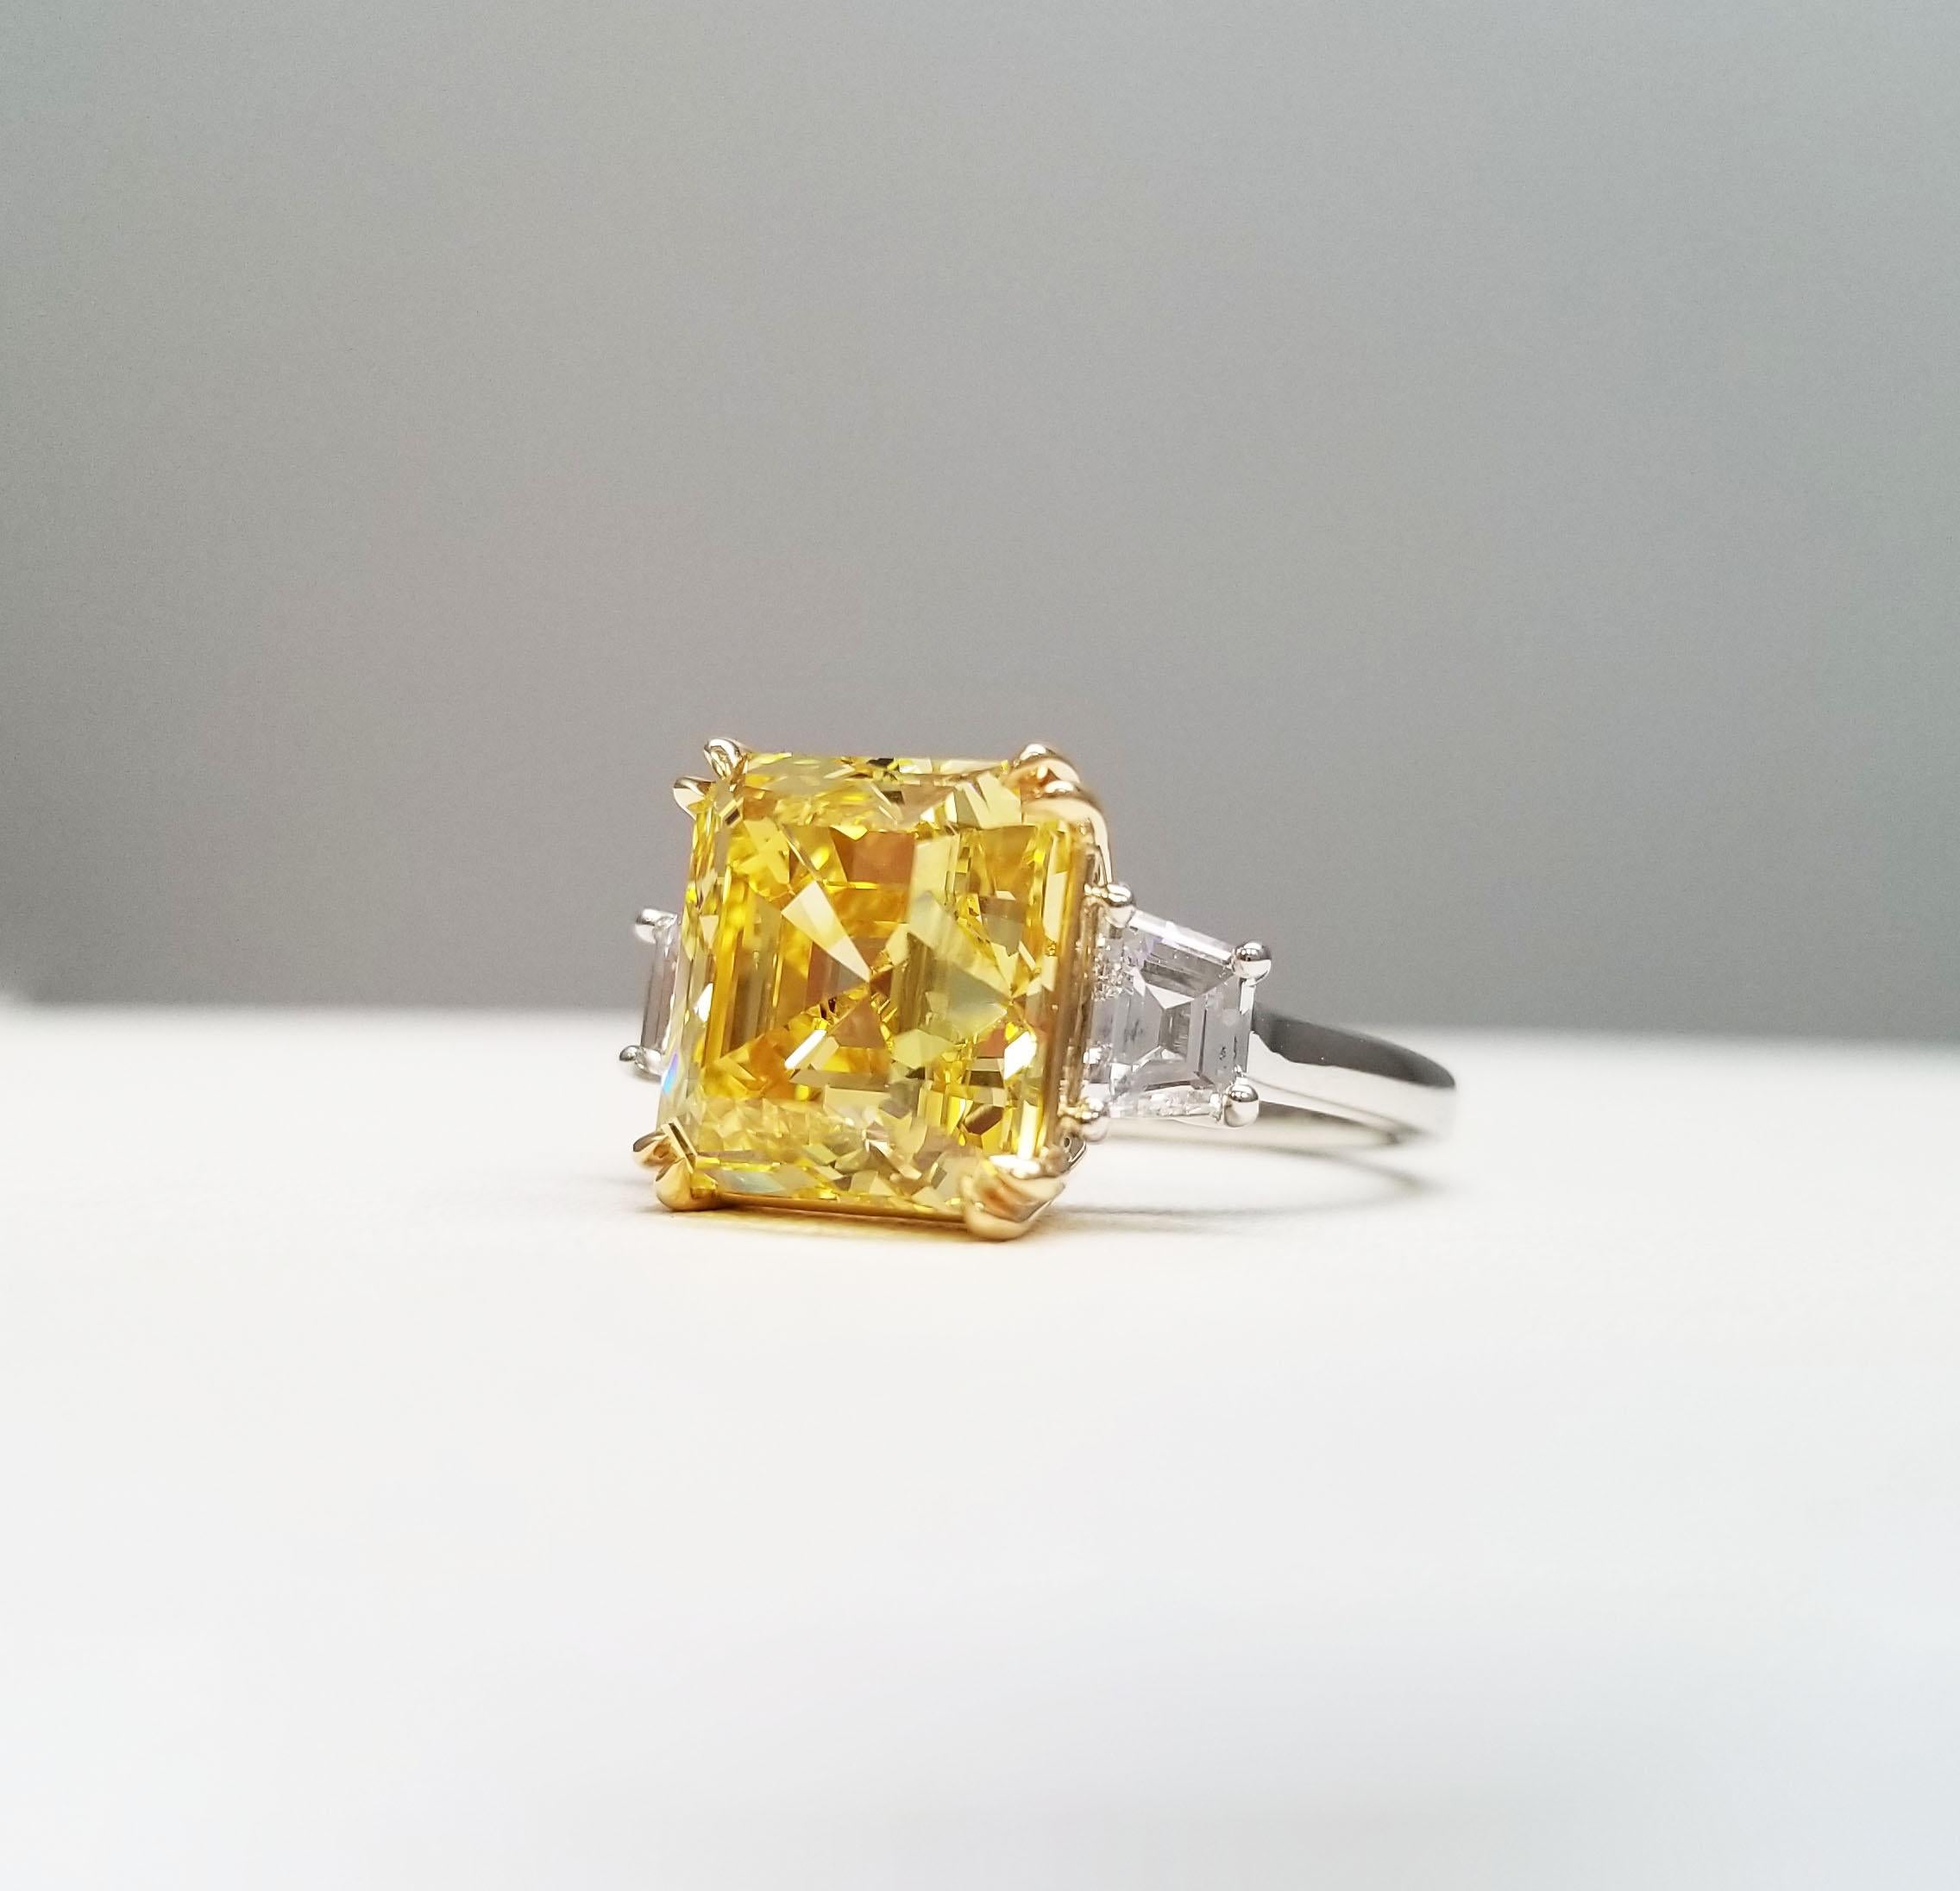 Contemporary Scarselli 6 Carat Fancy Vivid Yellow Emerald Cut Diamond Ring in Platinum